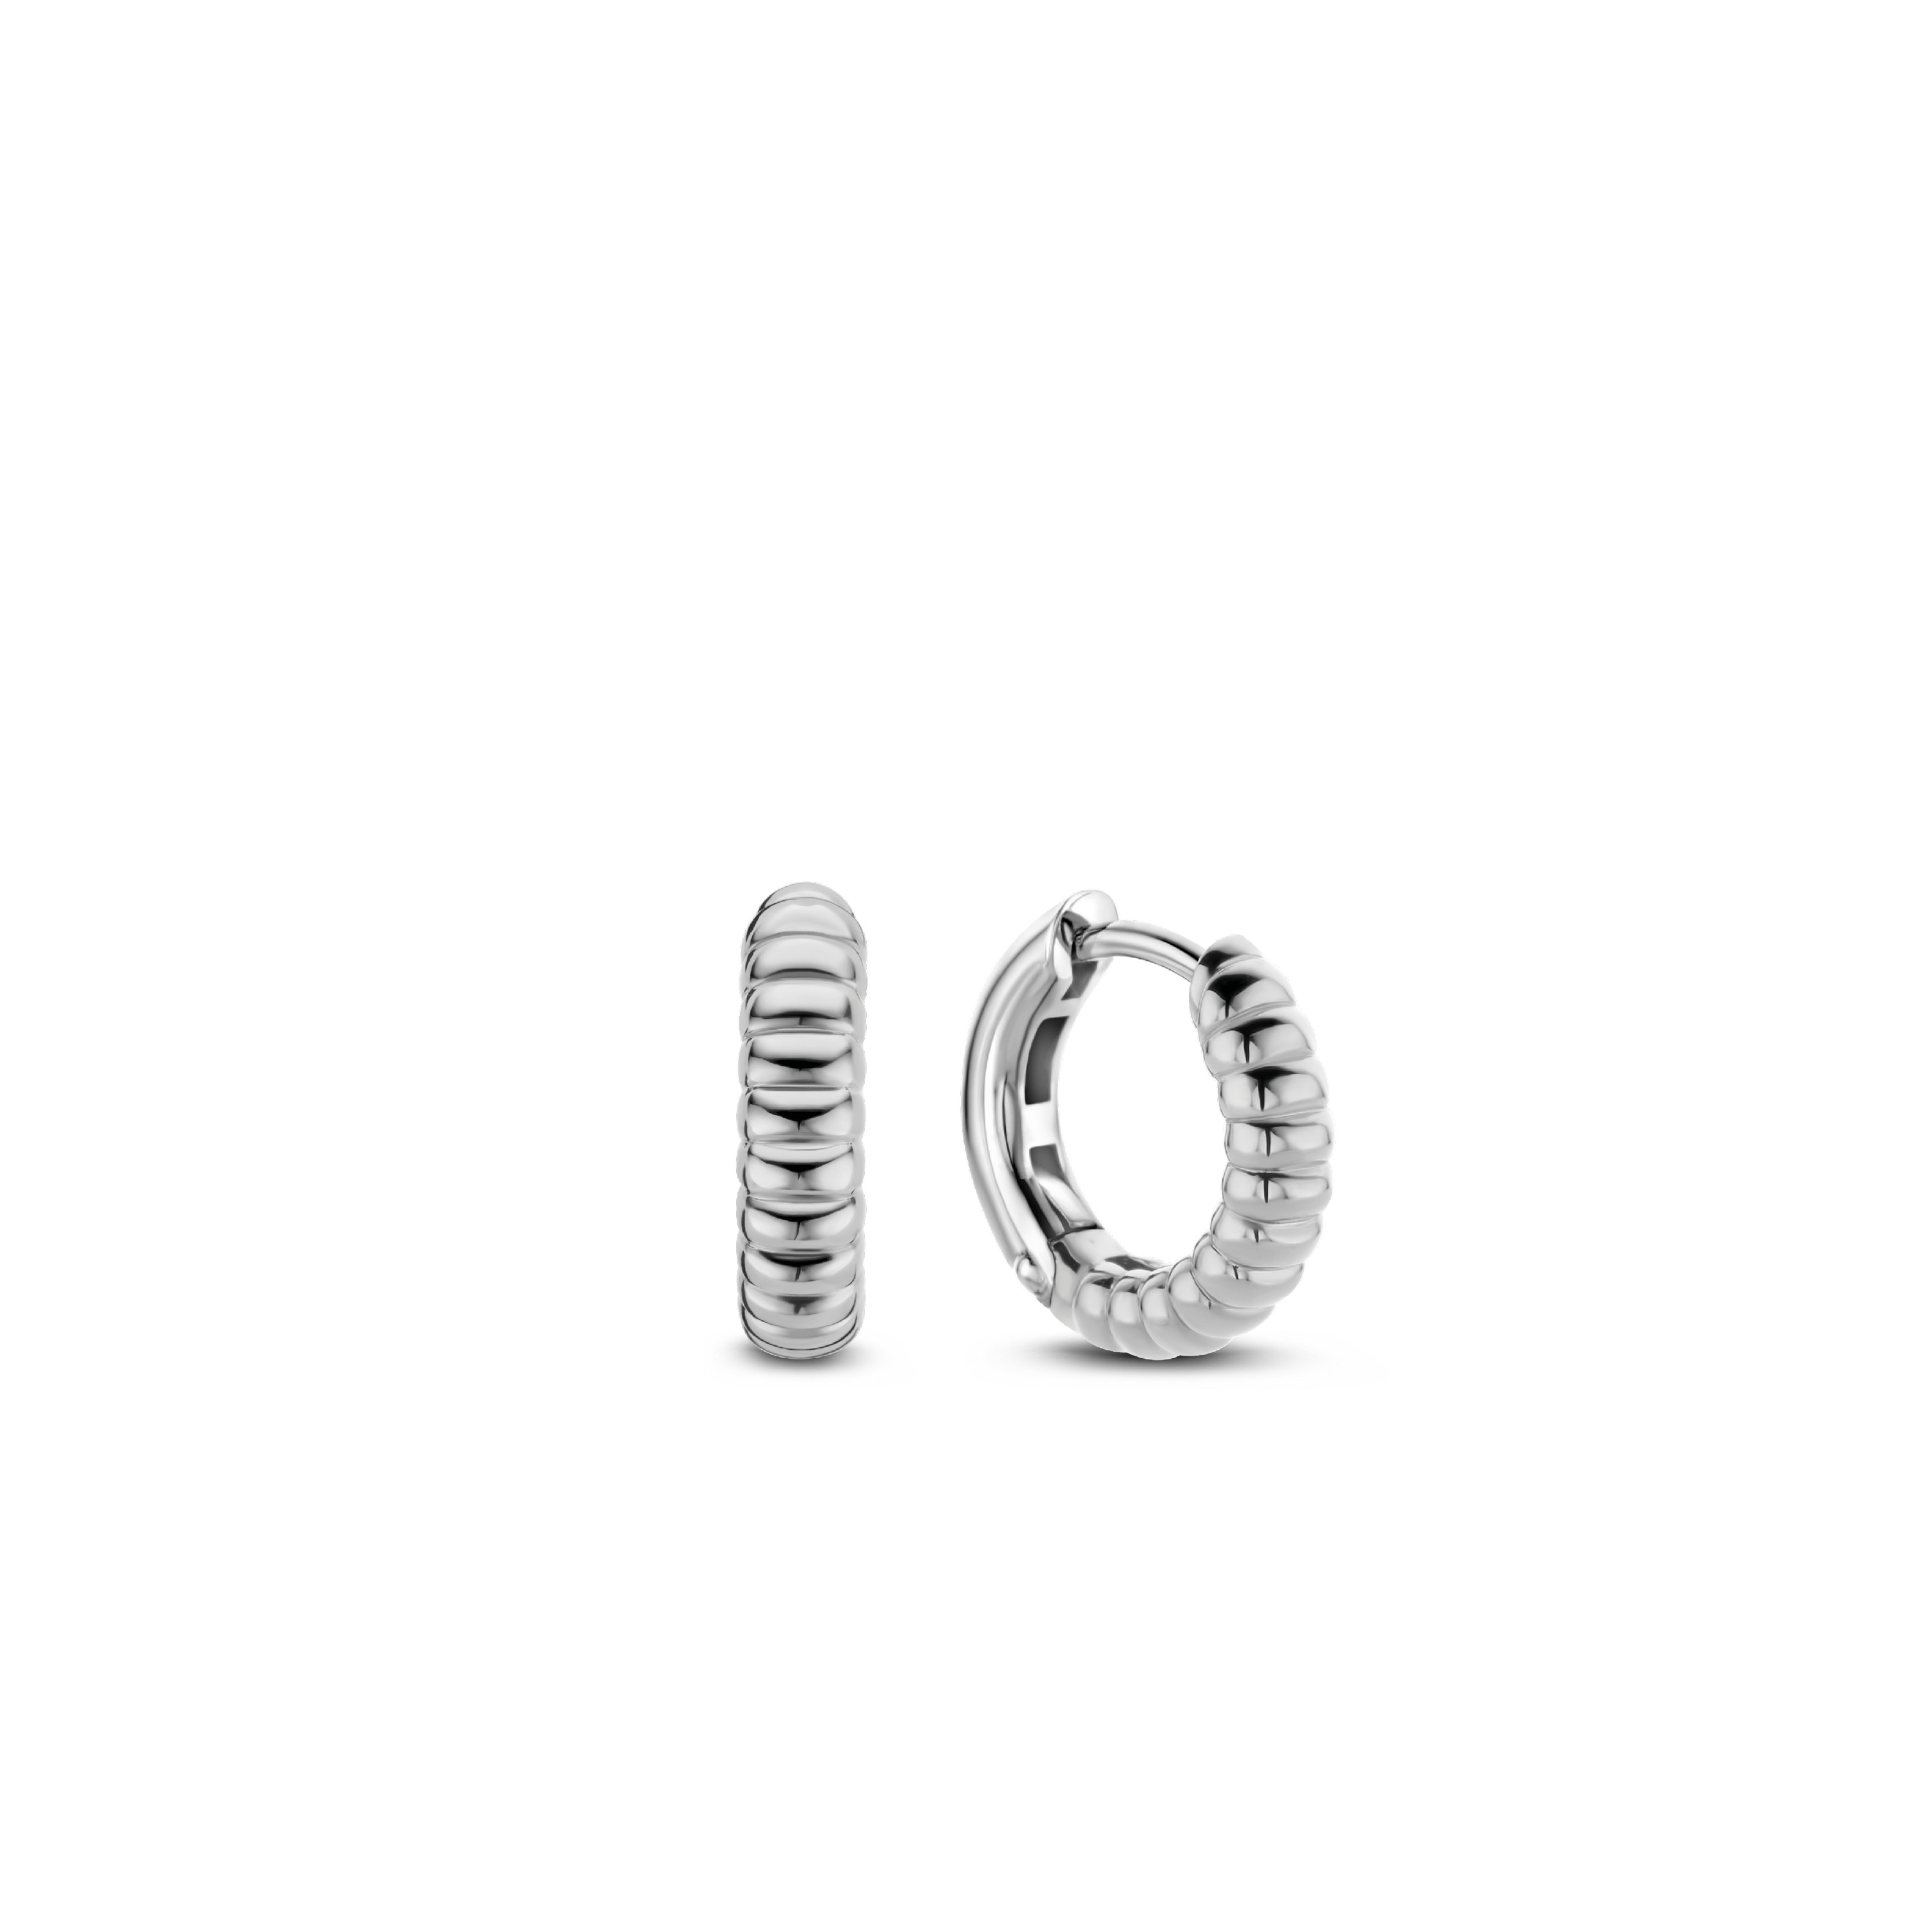 TI SENTO - Milano Earrings 7839SI Gala Jewelers Inc. White Oak, PA